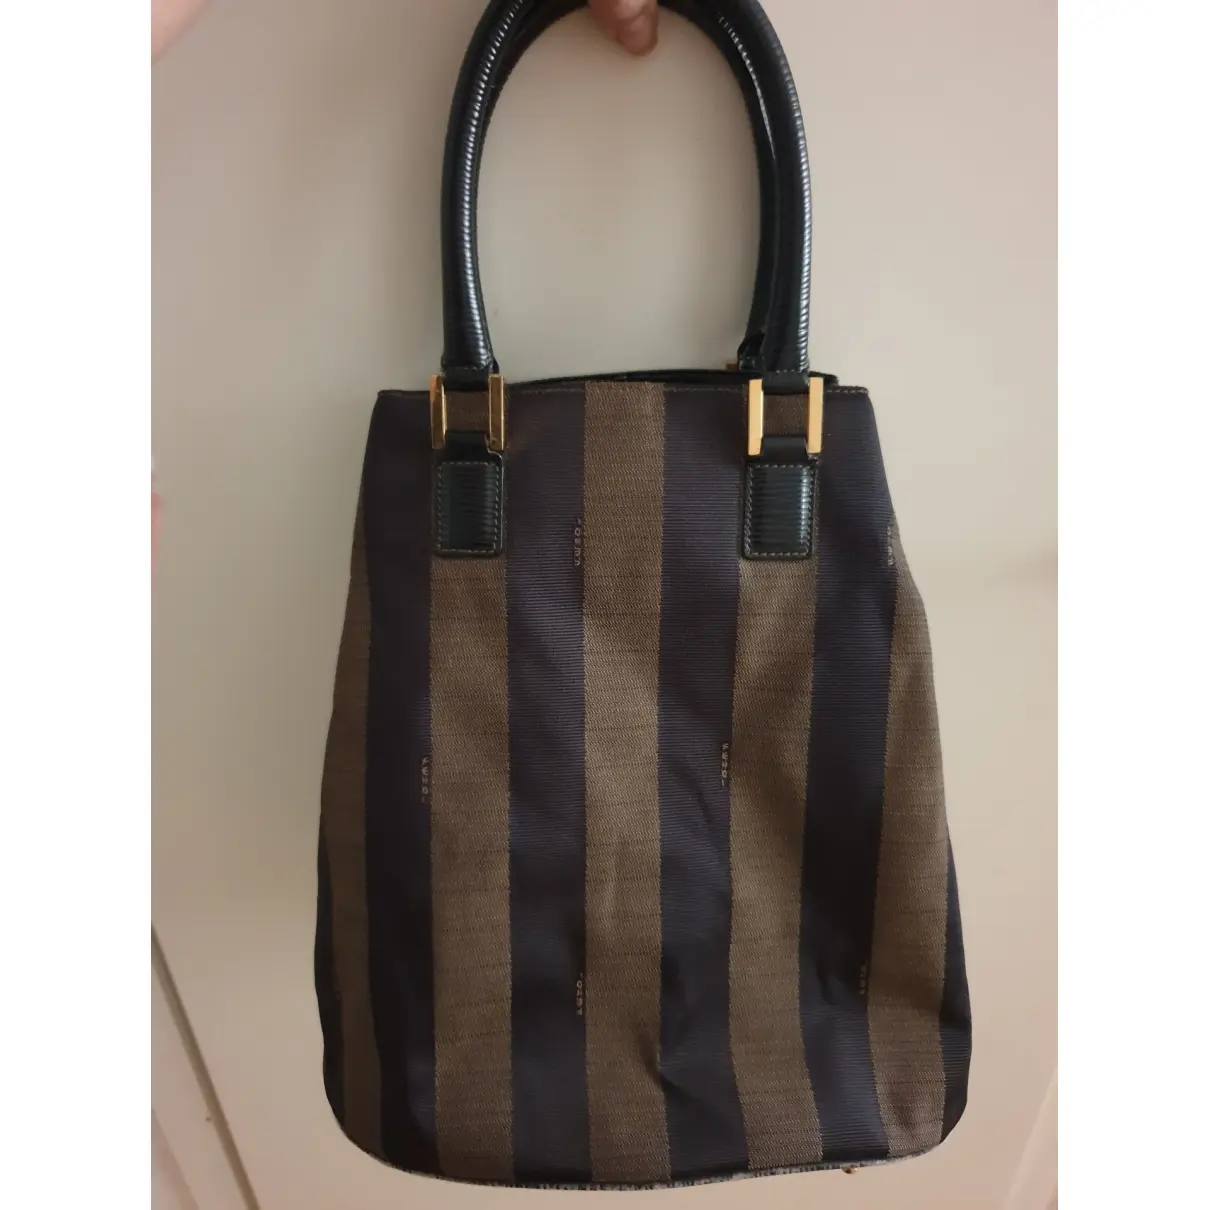 Fendi Cloth handbag for sale